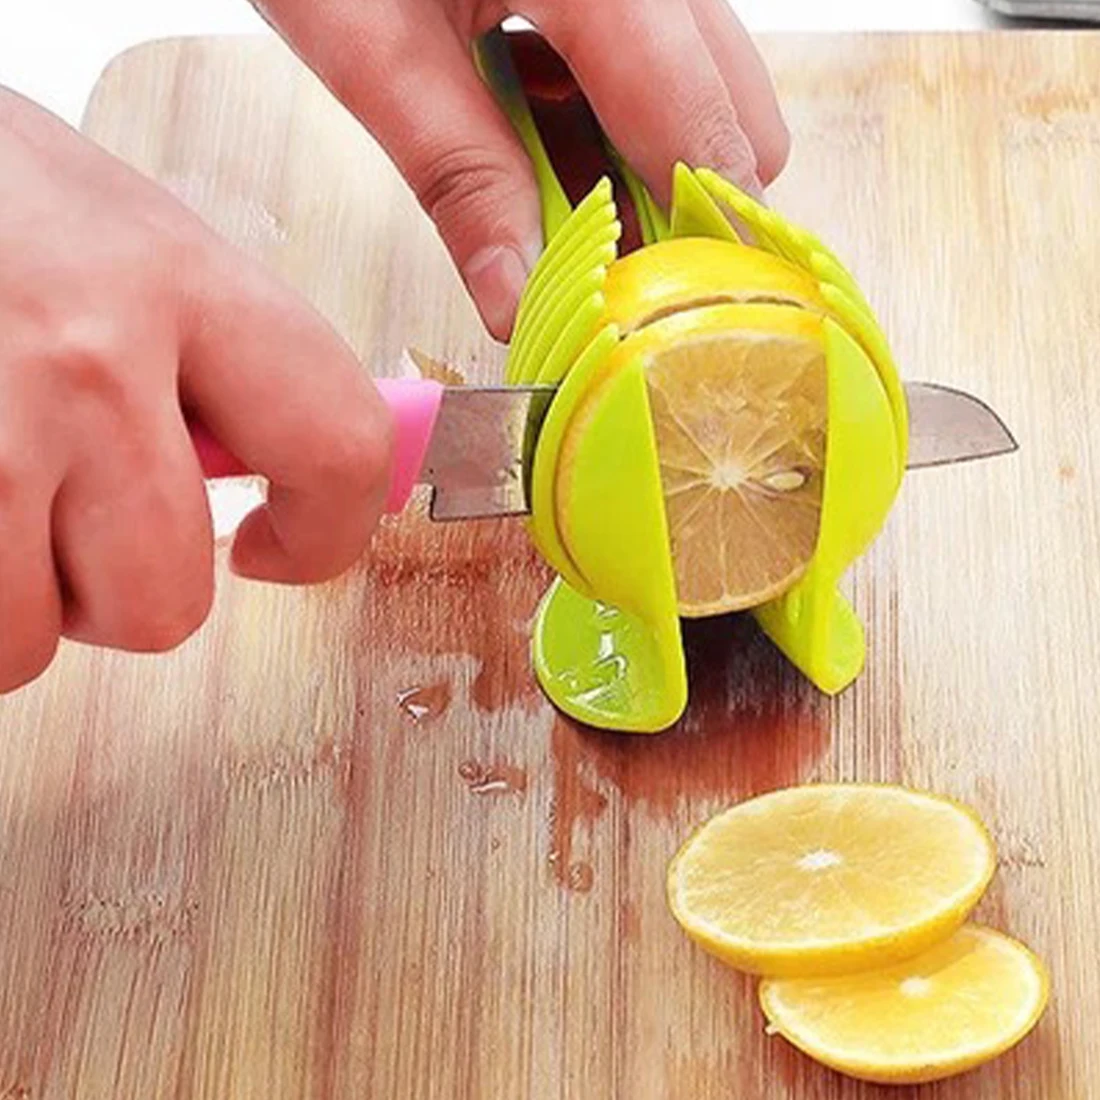 

Handheld Tomato Onion Slicer Bread Clip Fruit Vegetable Cutting Lemon Shreadders Potato Apple Gadget Kitchen Accessories